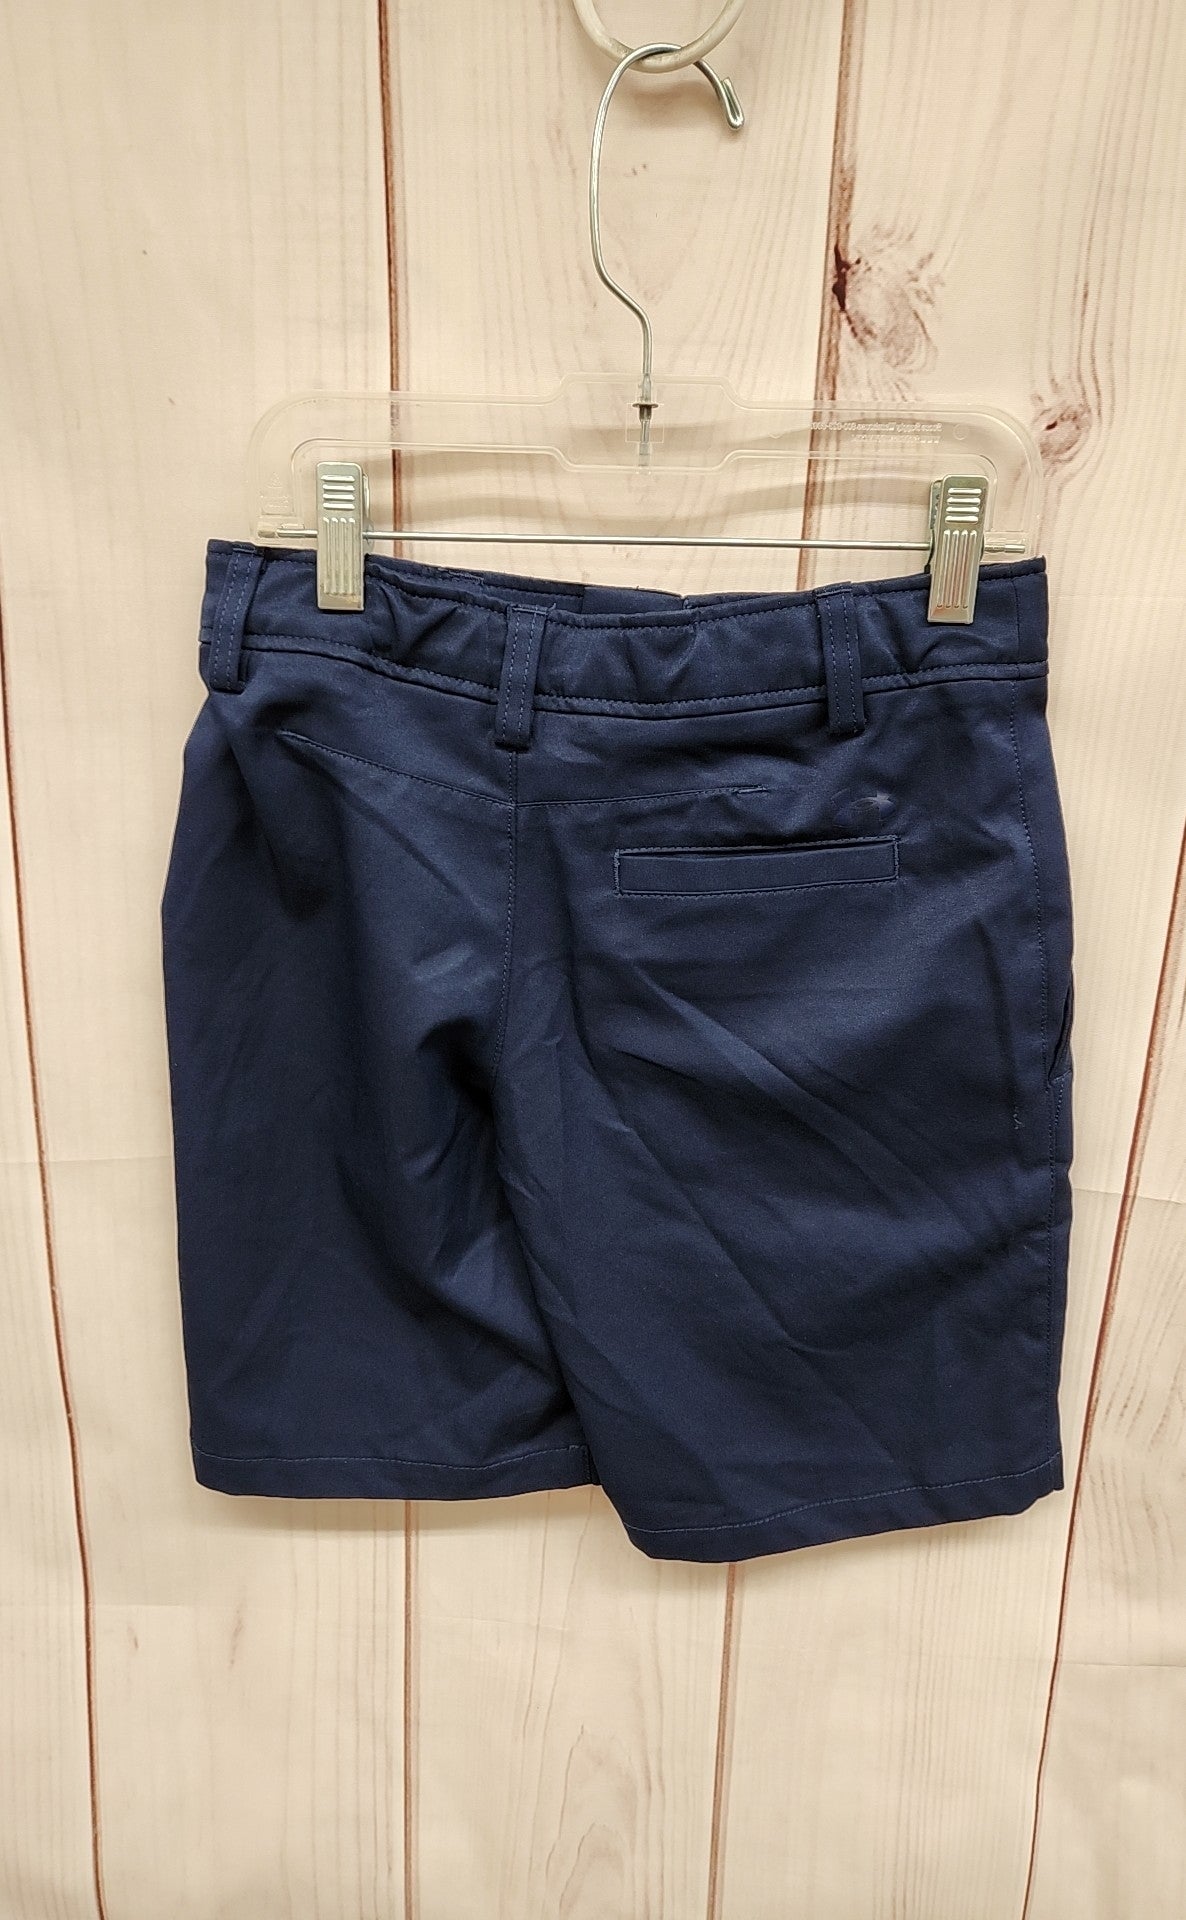 Under Armour Boy's Size 10/12 Navy Shorts